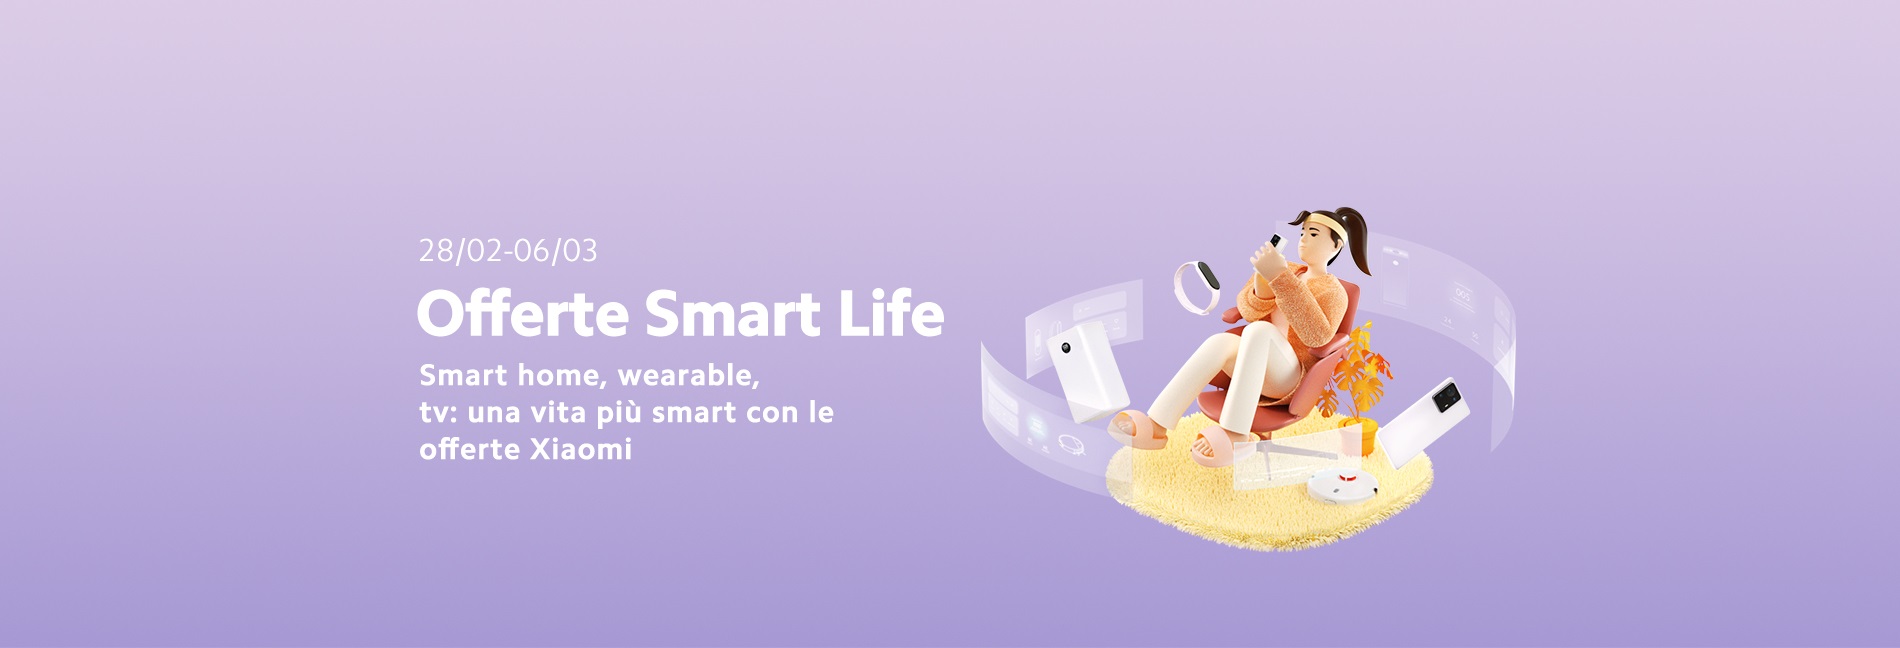 Locandina Offerte Smart Life Xiaomi